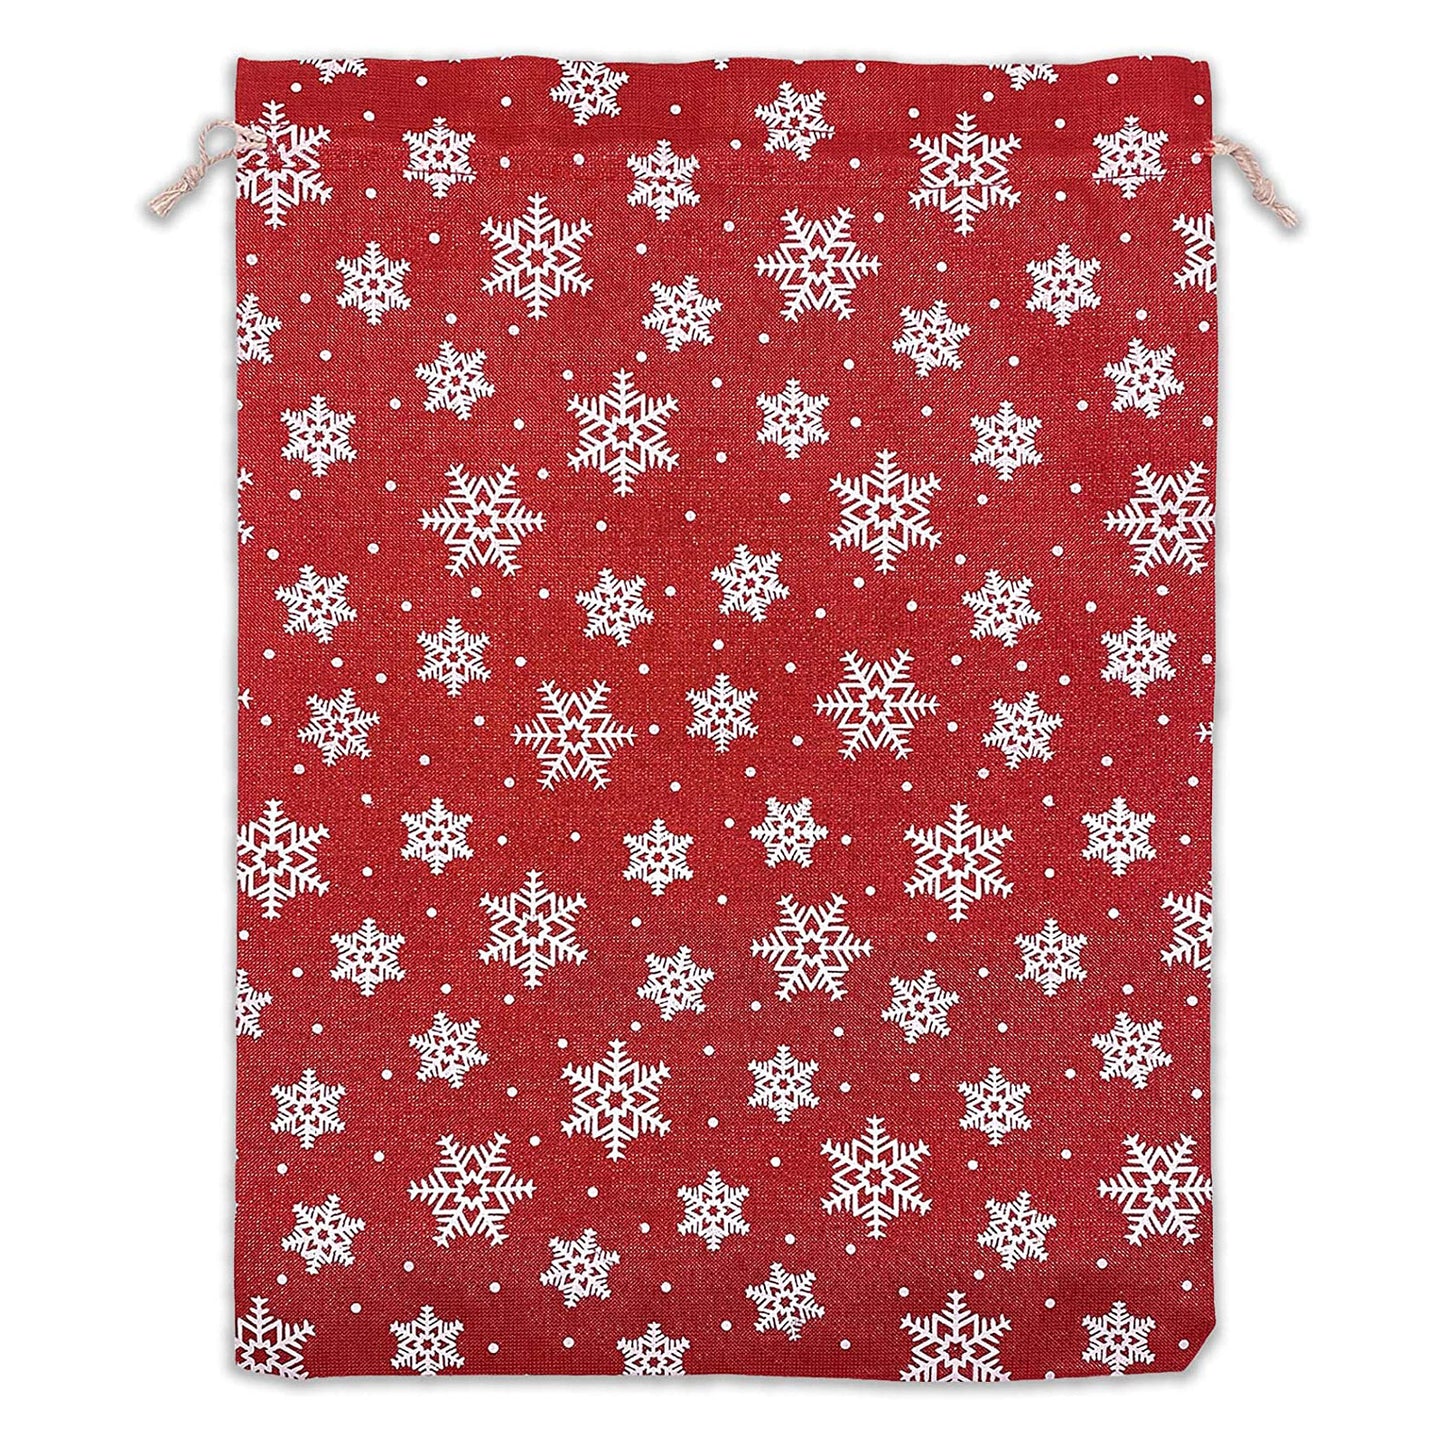 12" x 16" Jute Burlap Red Christmas White Snowflake Drawstring Gift Bags